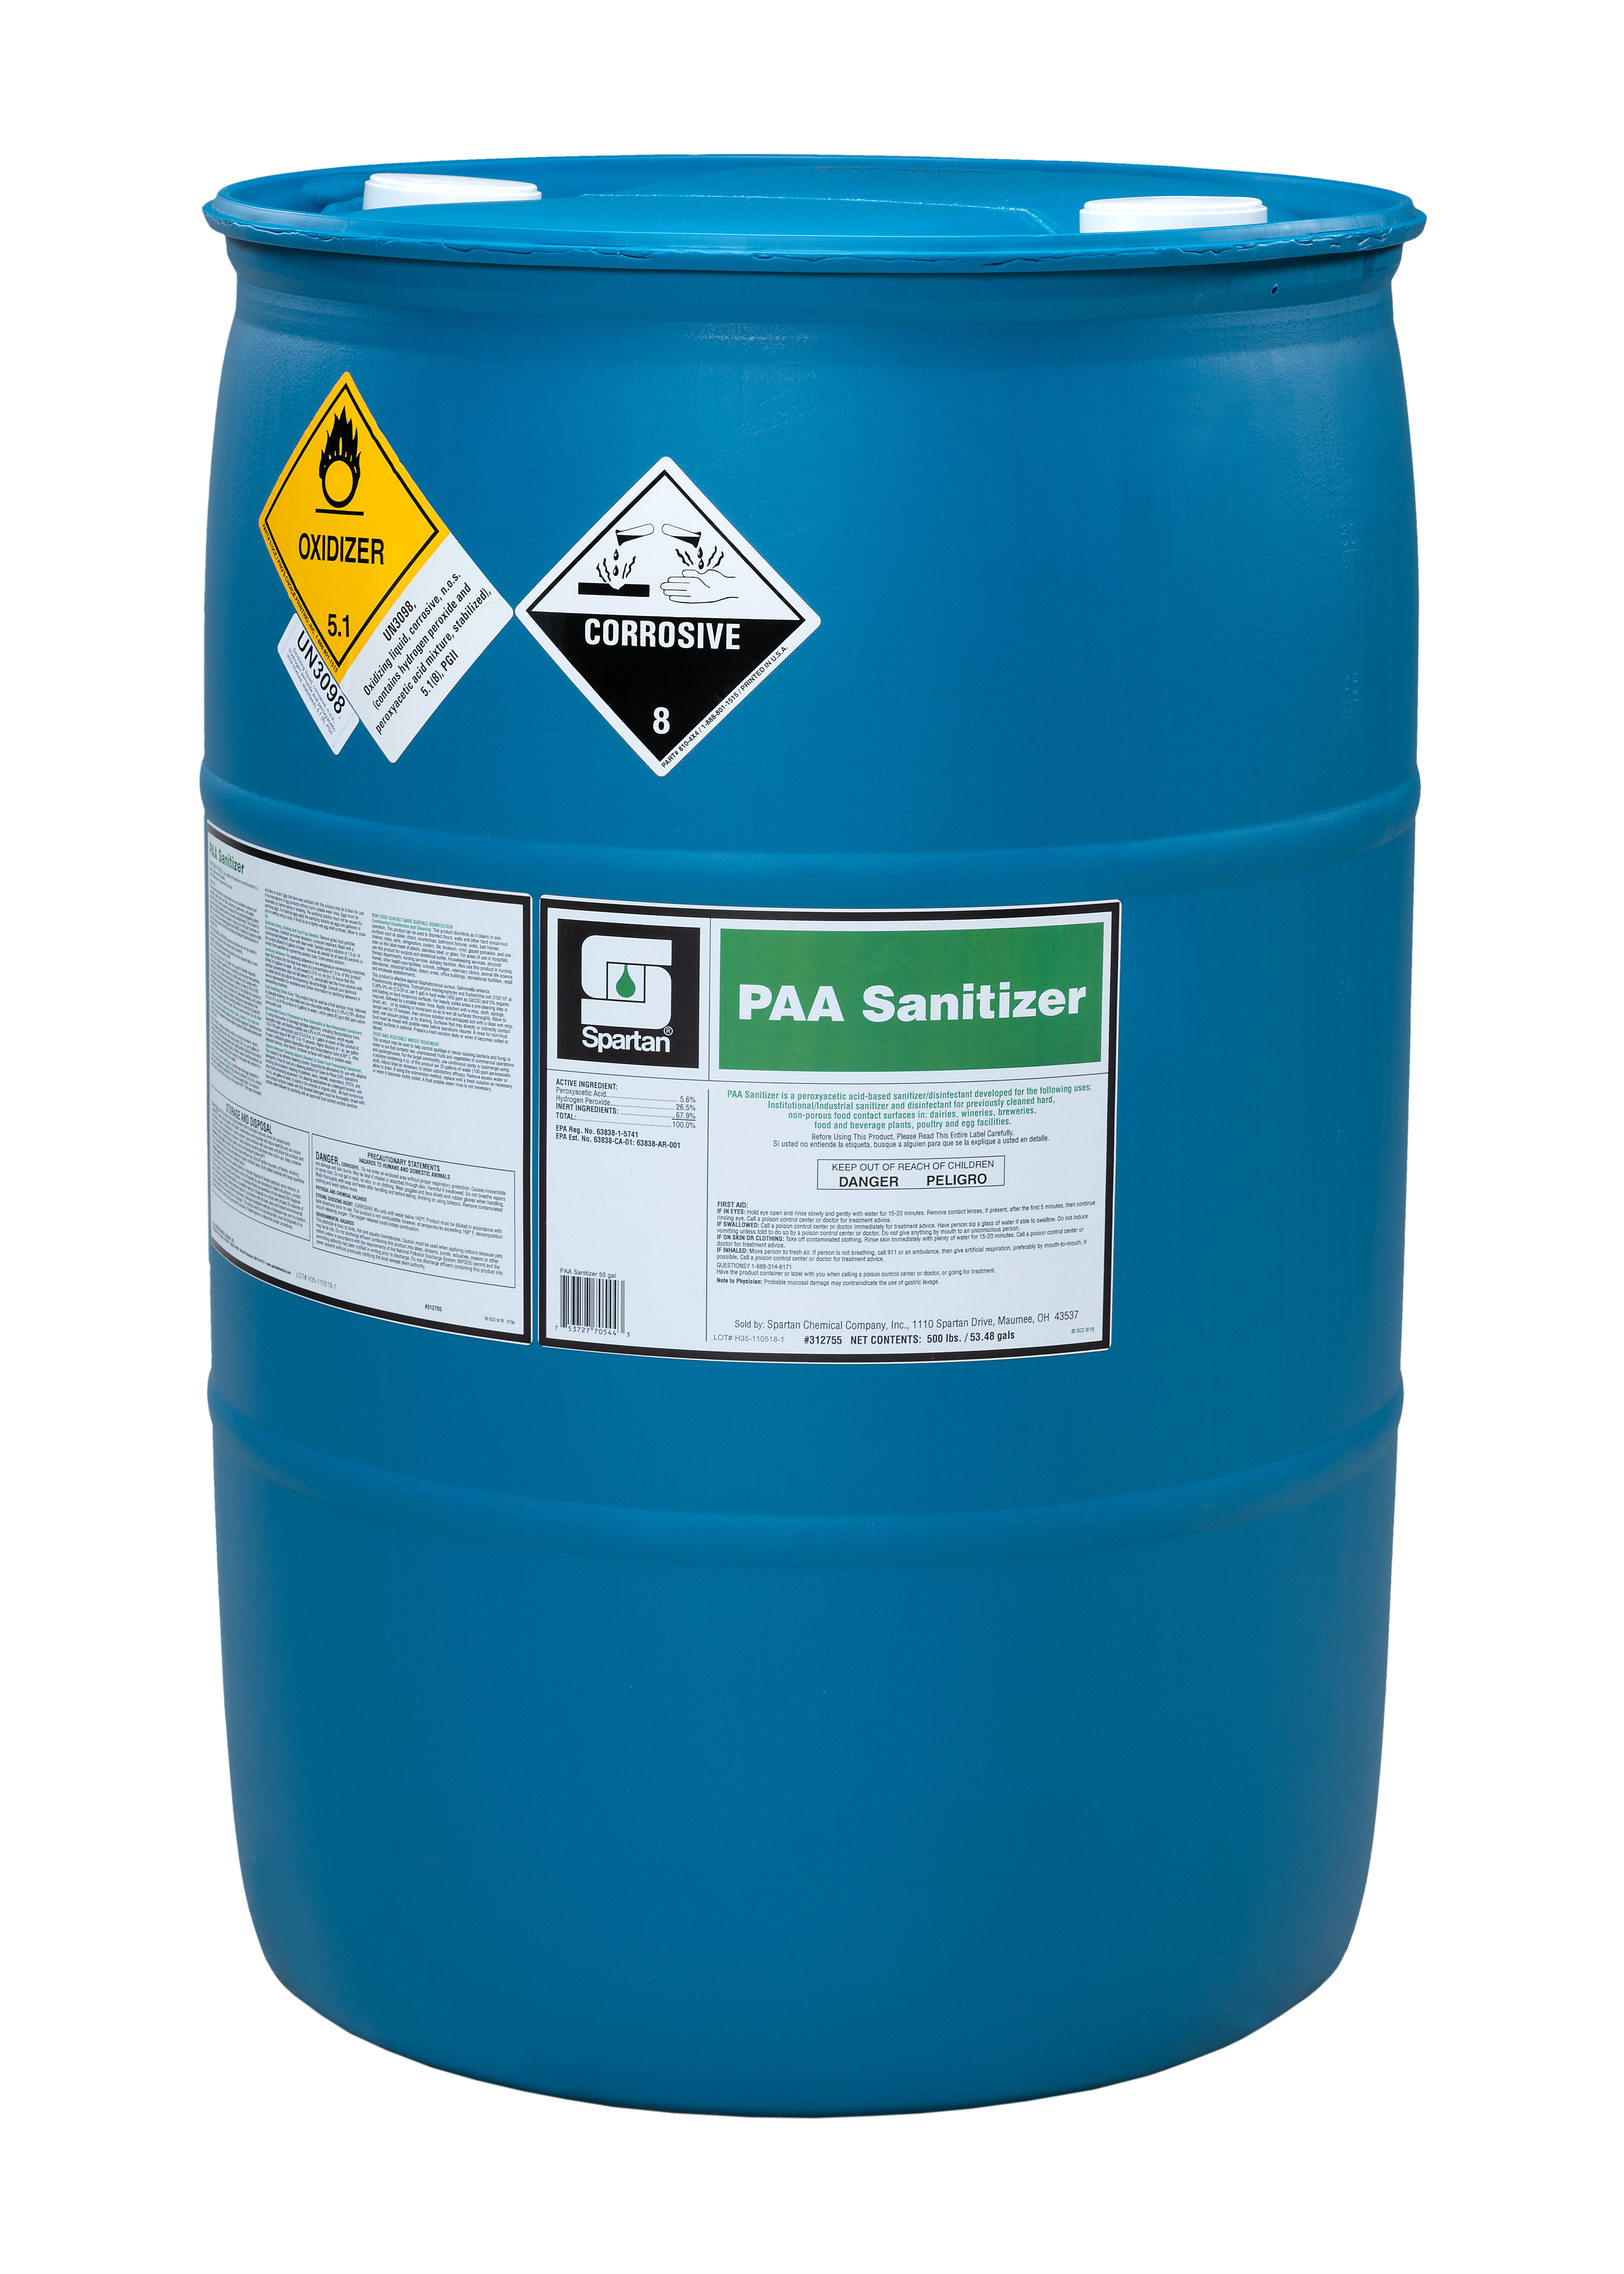 PAA+Sanitizer+%7B52+gallon+drum%7D